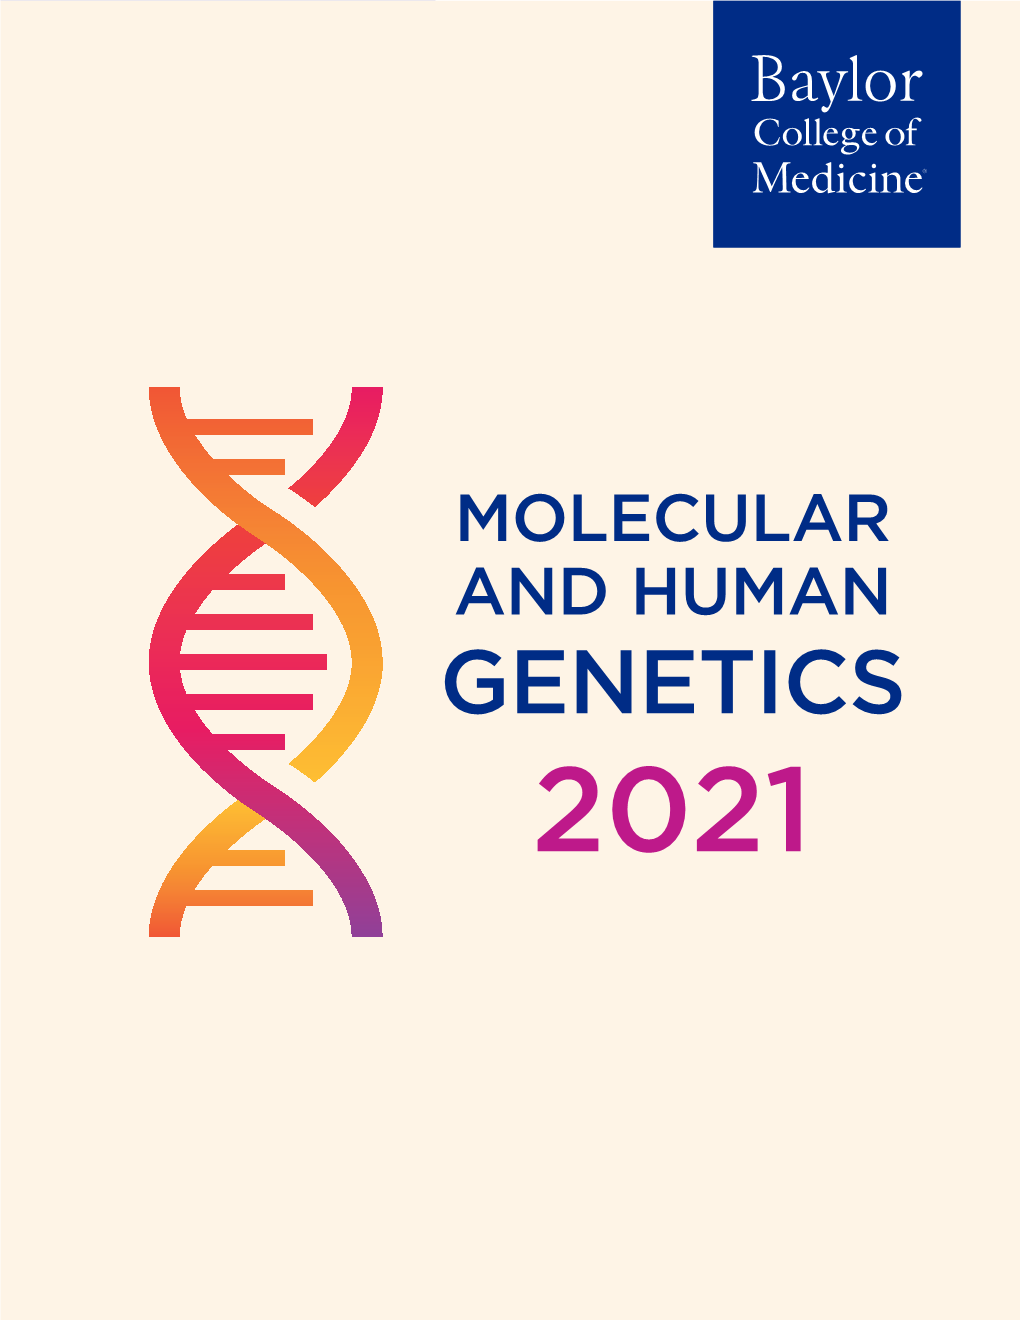 Genetics MOLECULAR and HUMAN GENETICS 2021